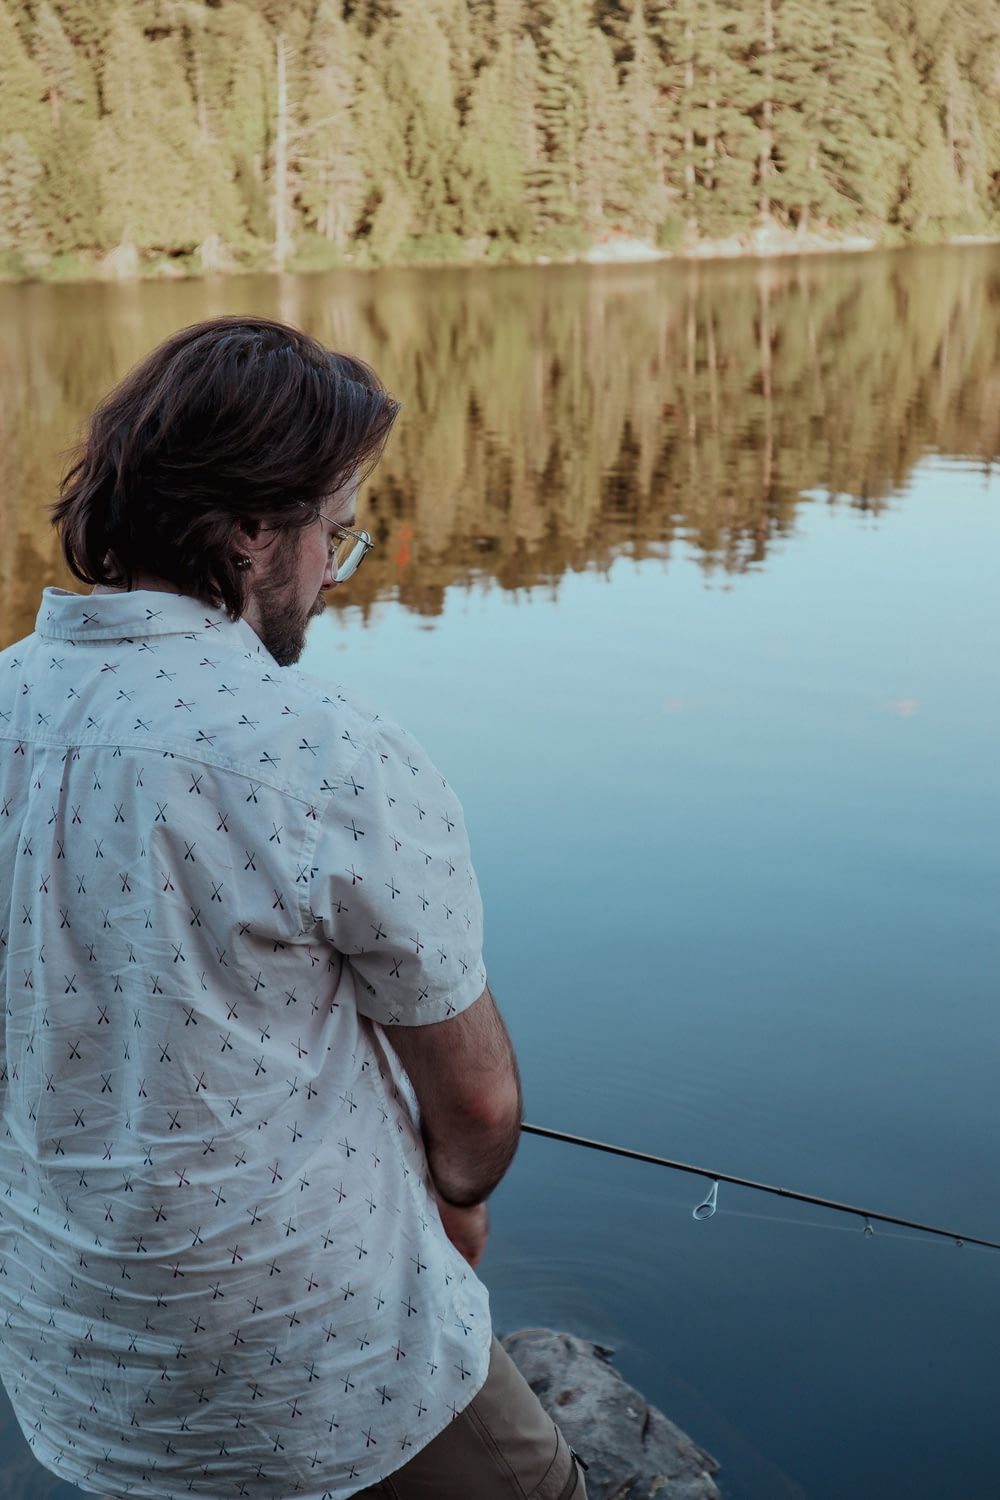 Un hombre pescando en un lago con árboles al fondo